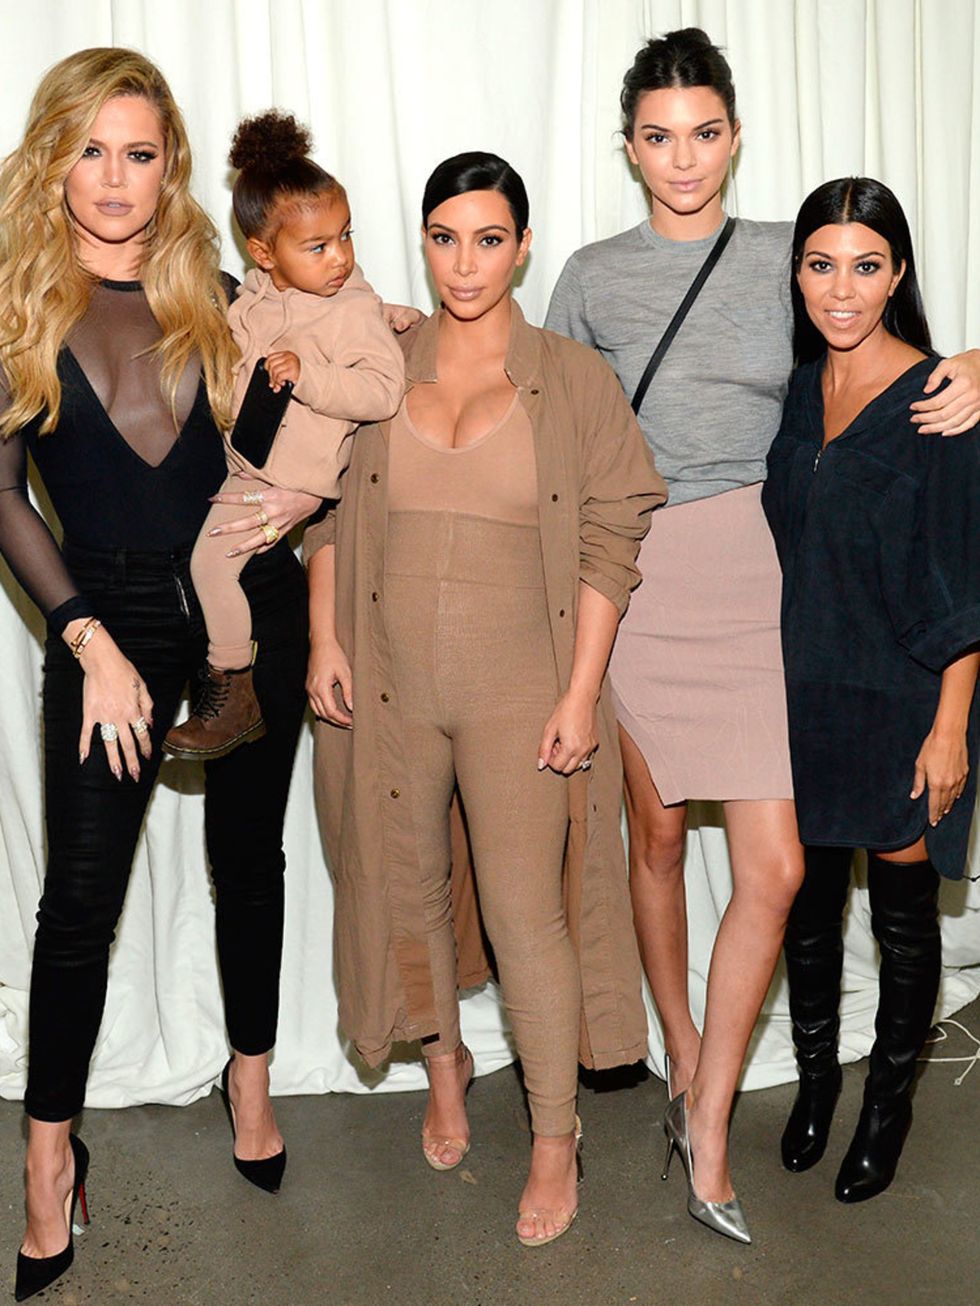 Khloe Kardashian, North West, Kim Kardashian, Kendall Jenner and Kourtney Kardashian attend the Kanye West Yeezy Season 2 show during s/s 16 NYFW.